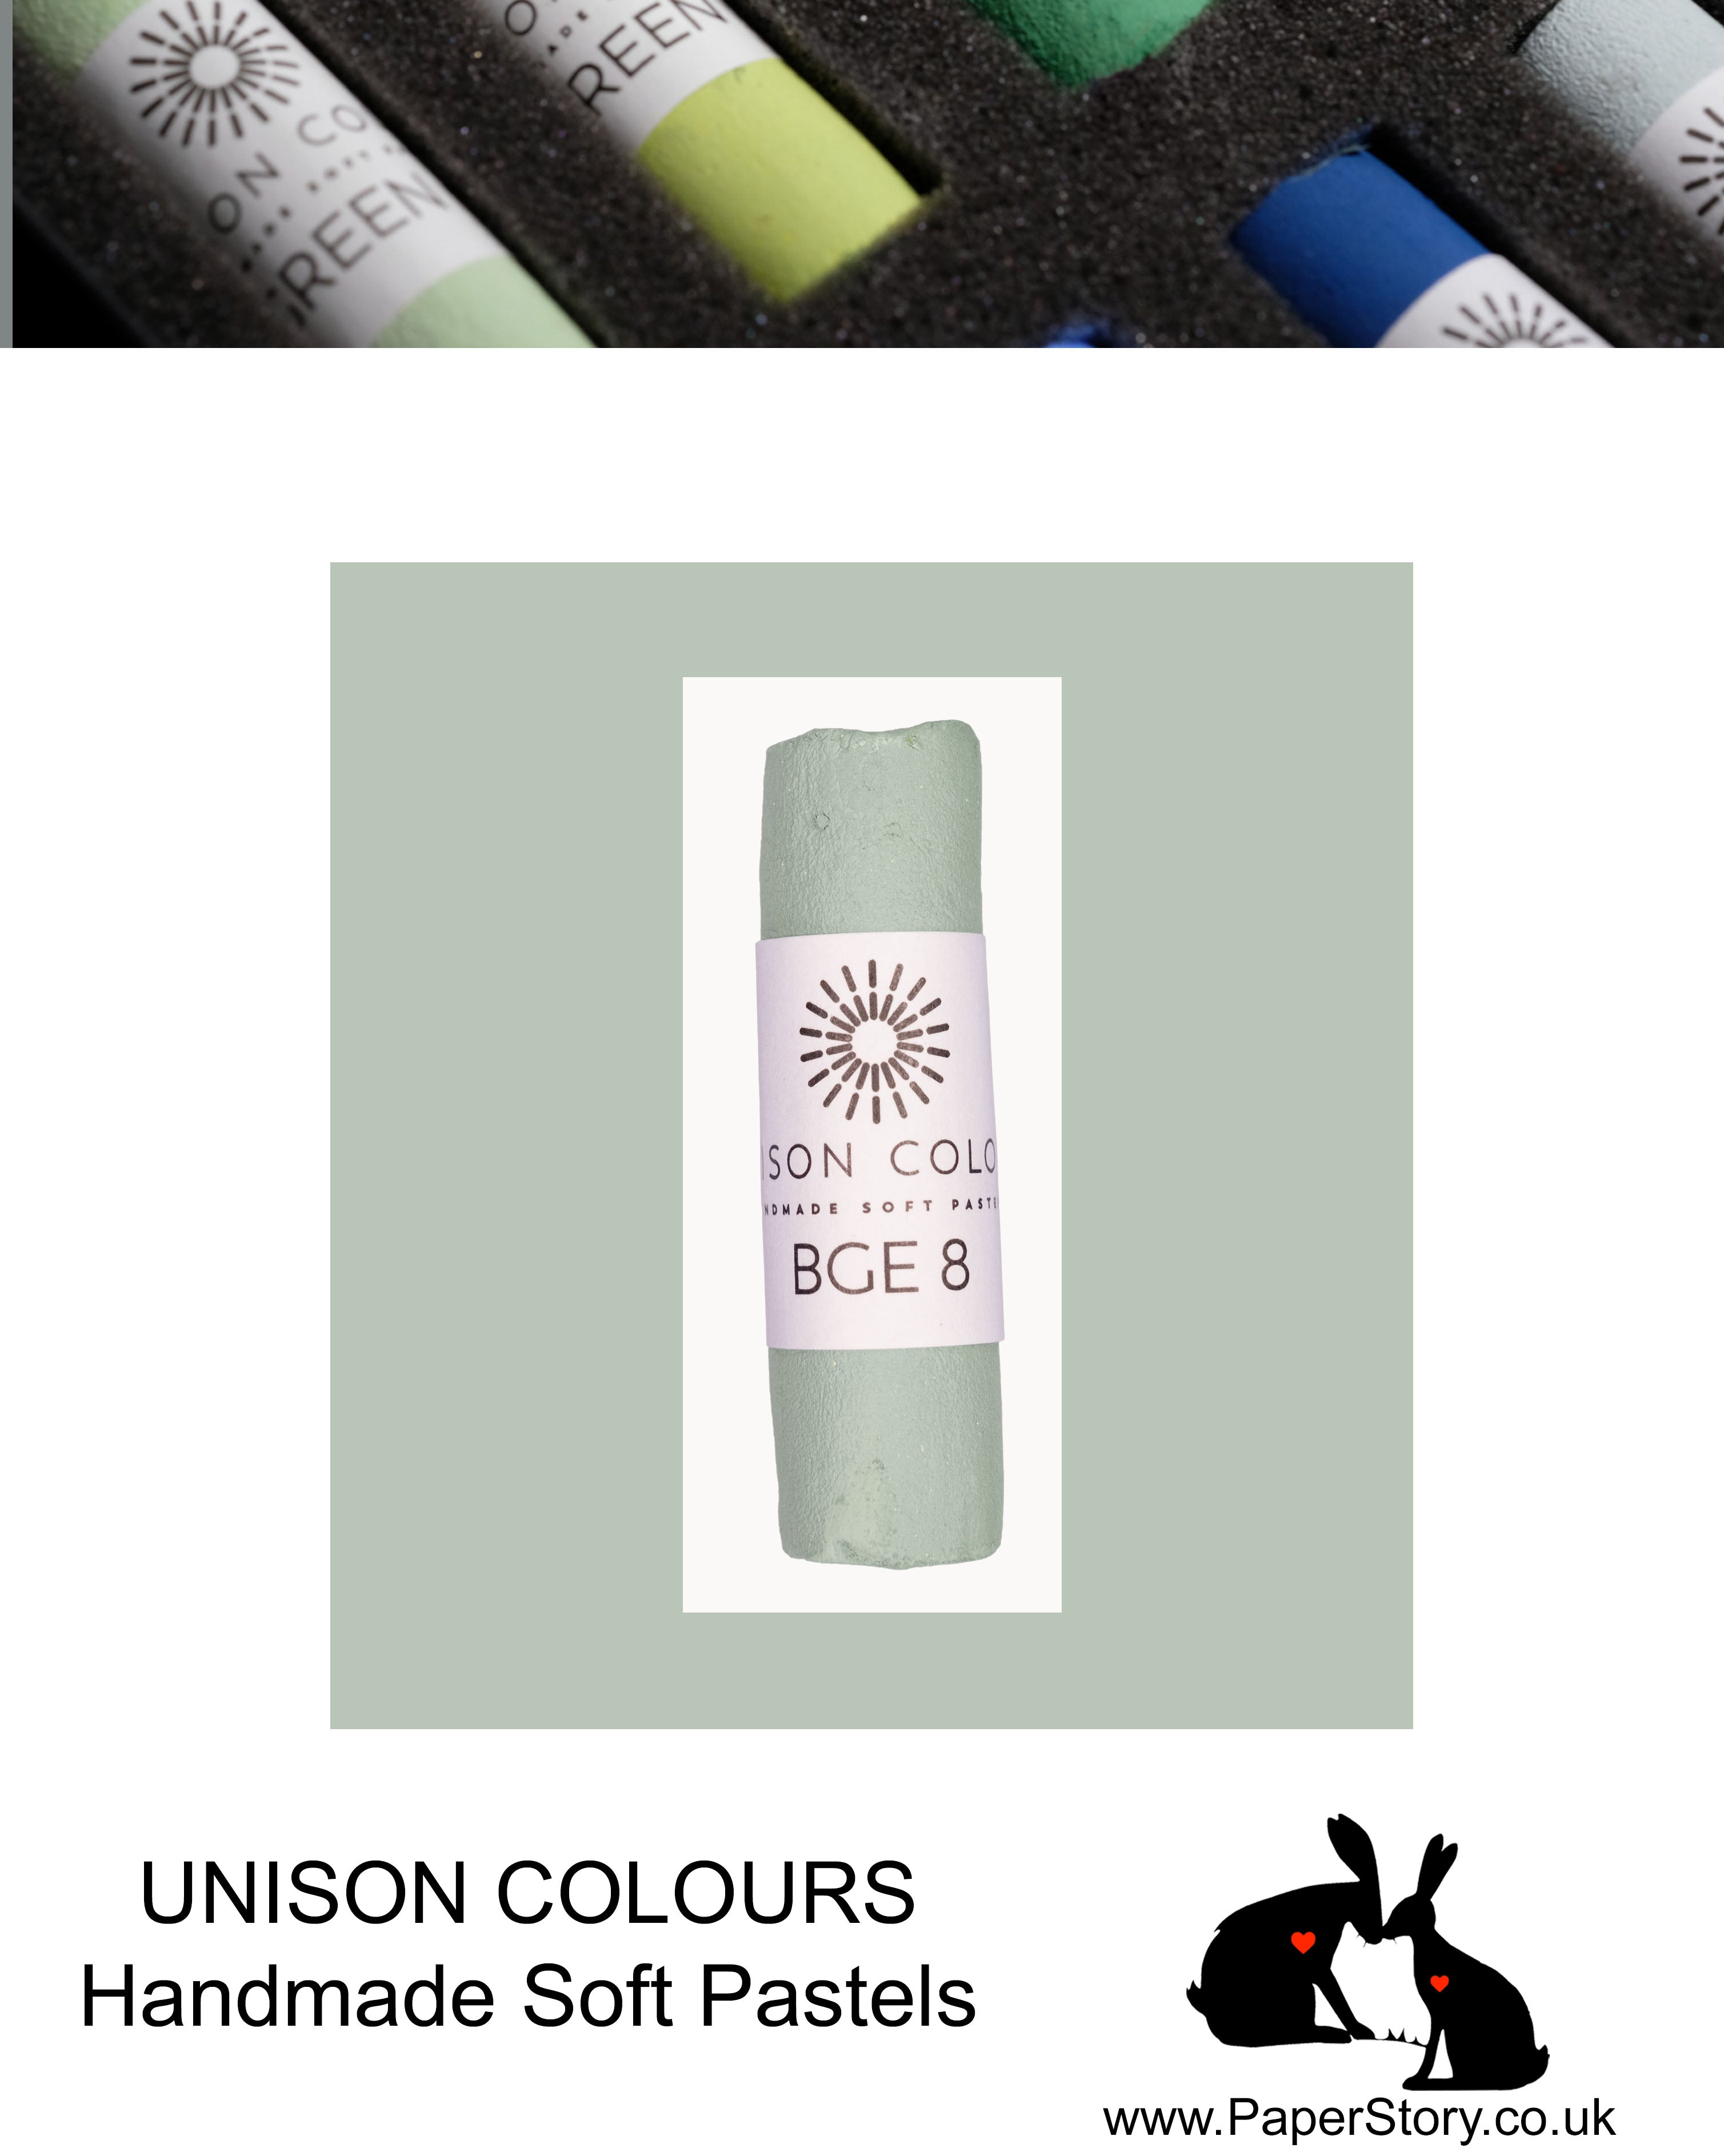 Unison Colour Handmade Soft Pastels Blue Green Earth 8 - Size Regular